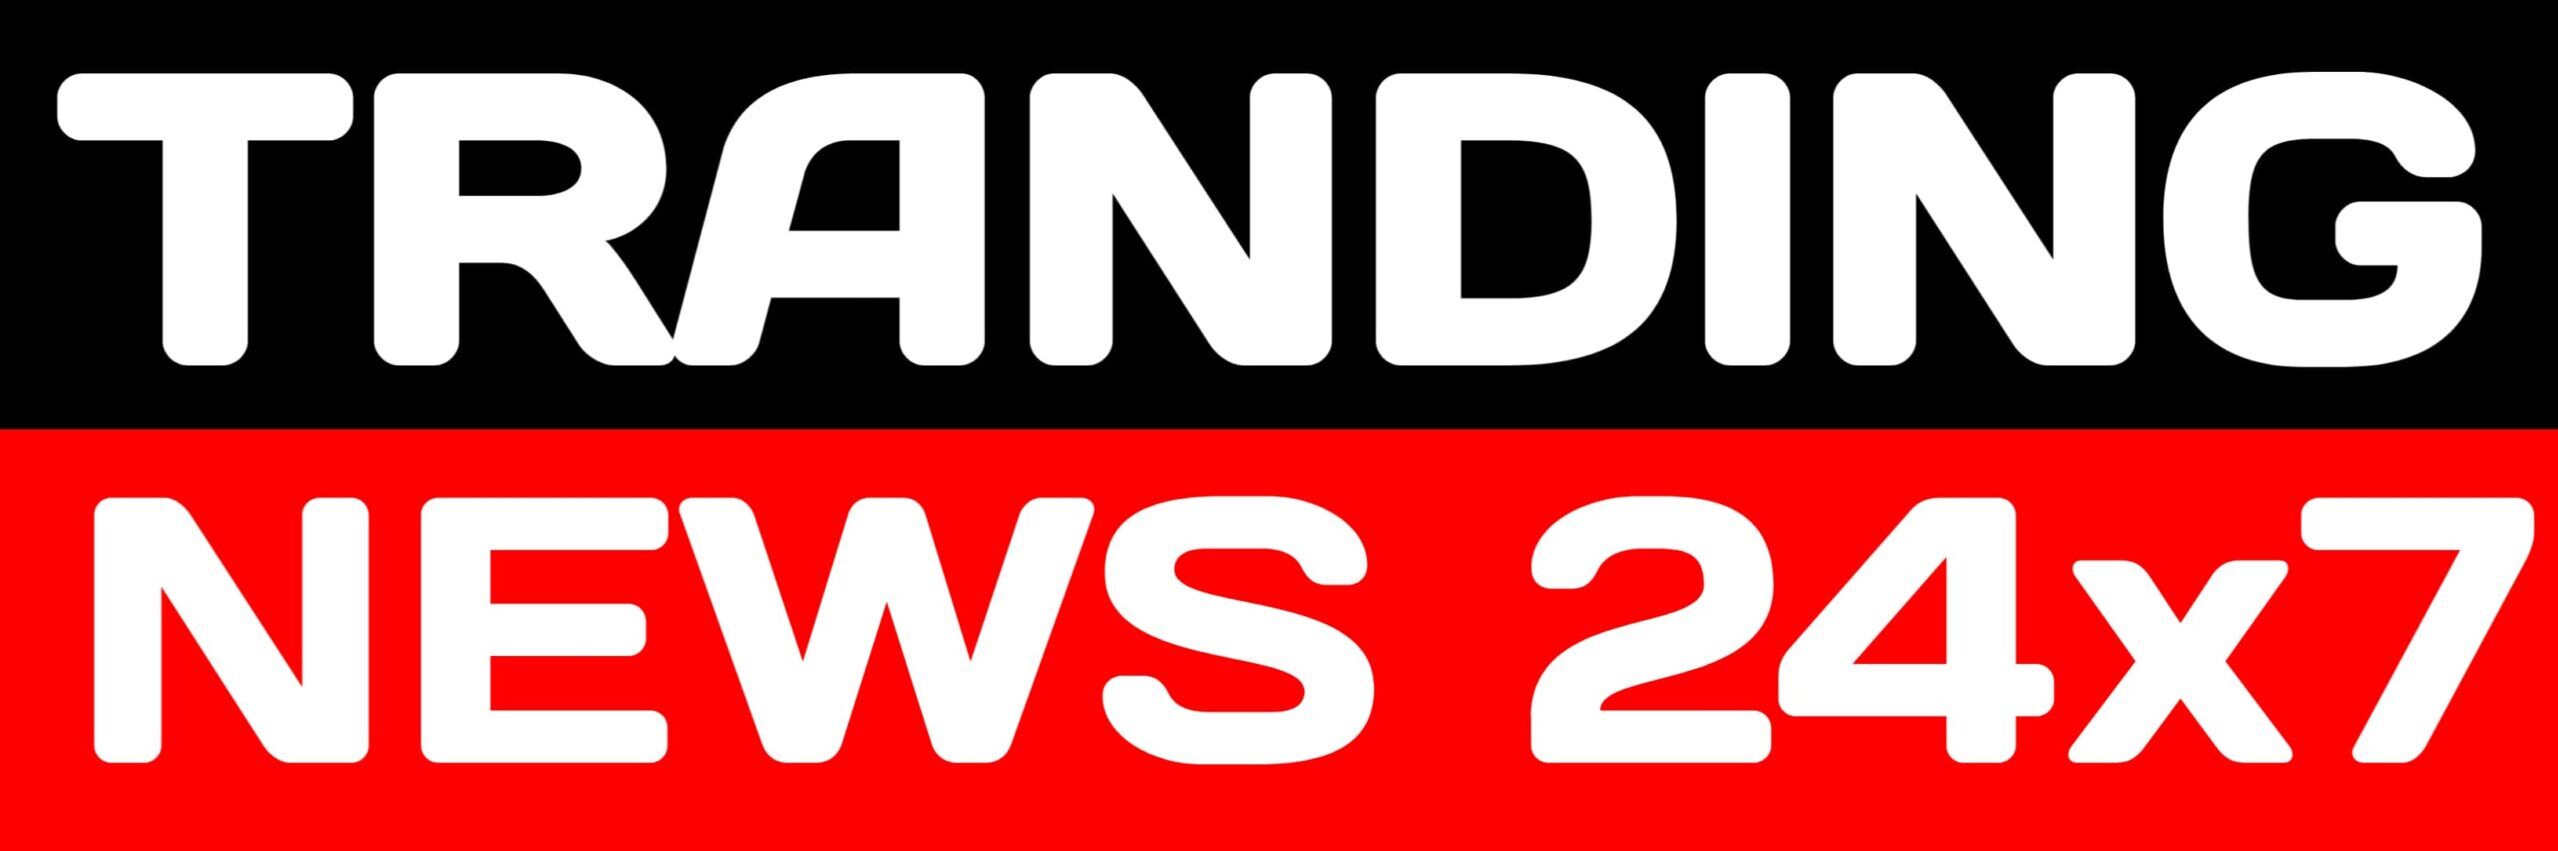 Tranding news24x7